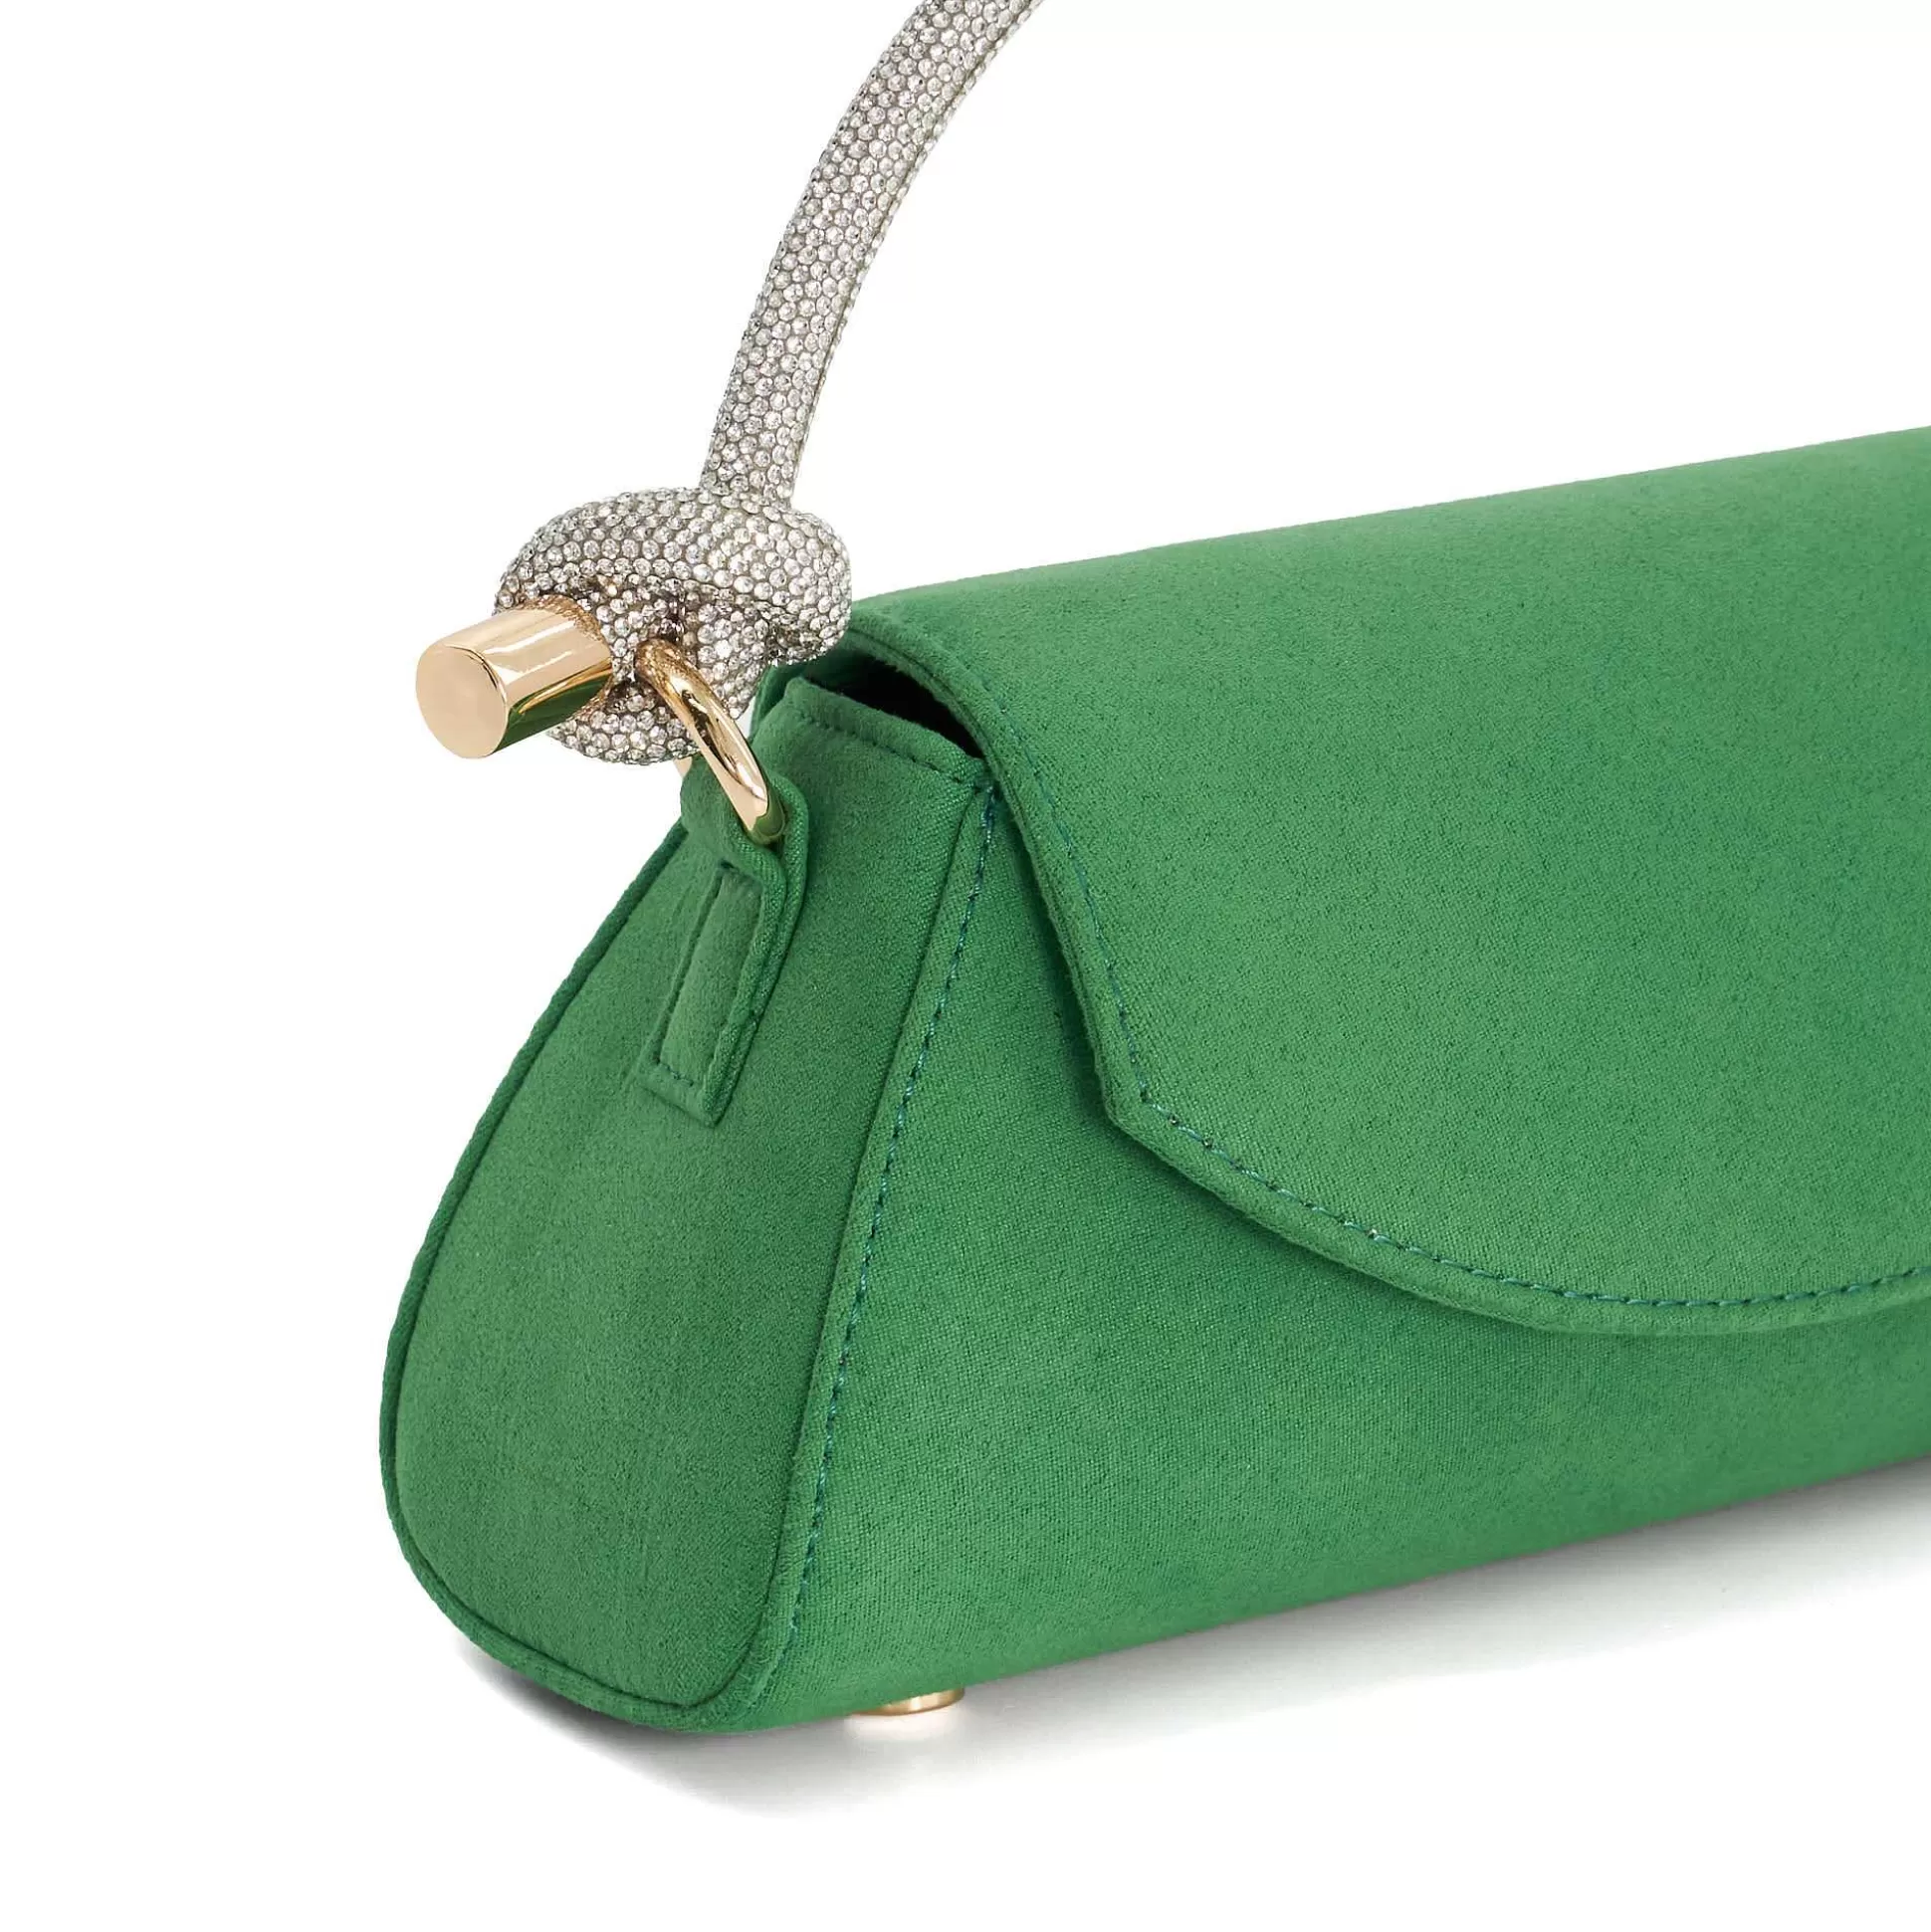 Dune London BRYNLEY - GREEN- Handbags | Gifts